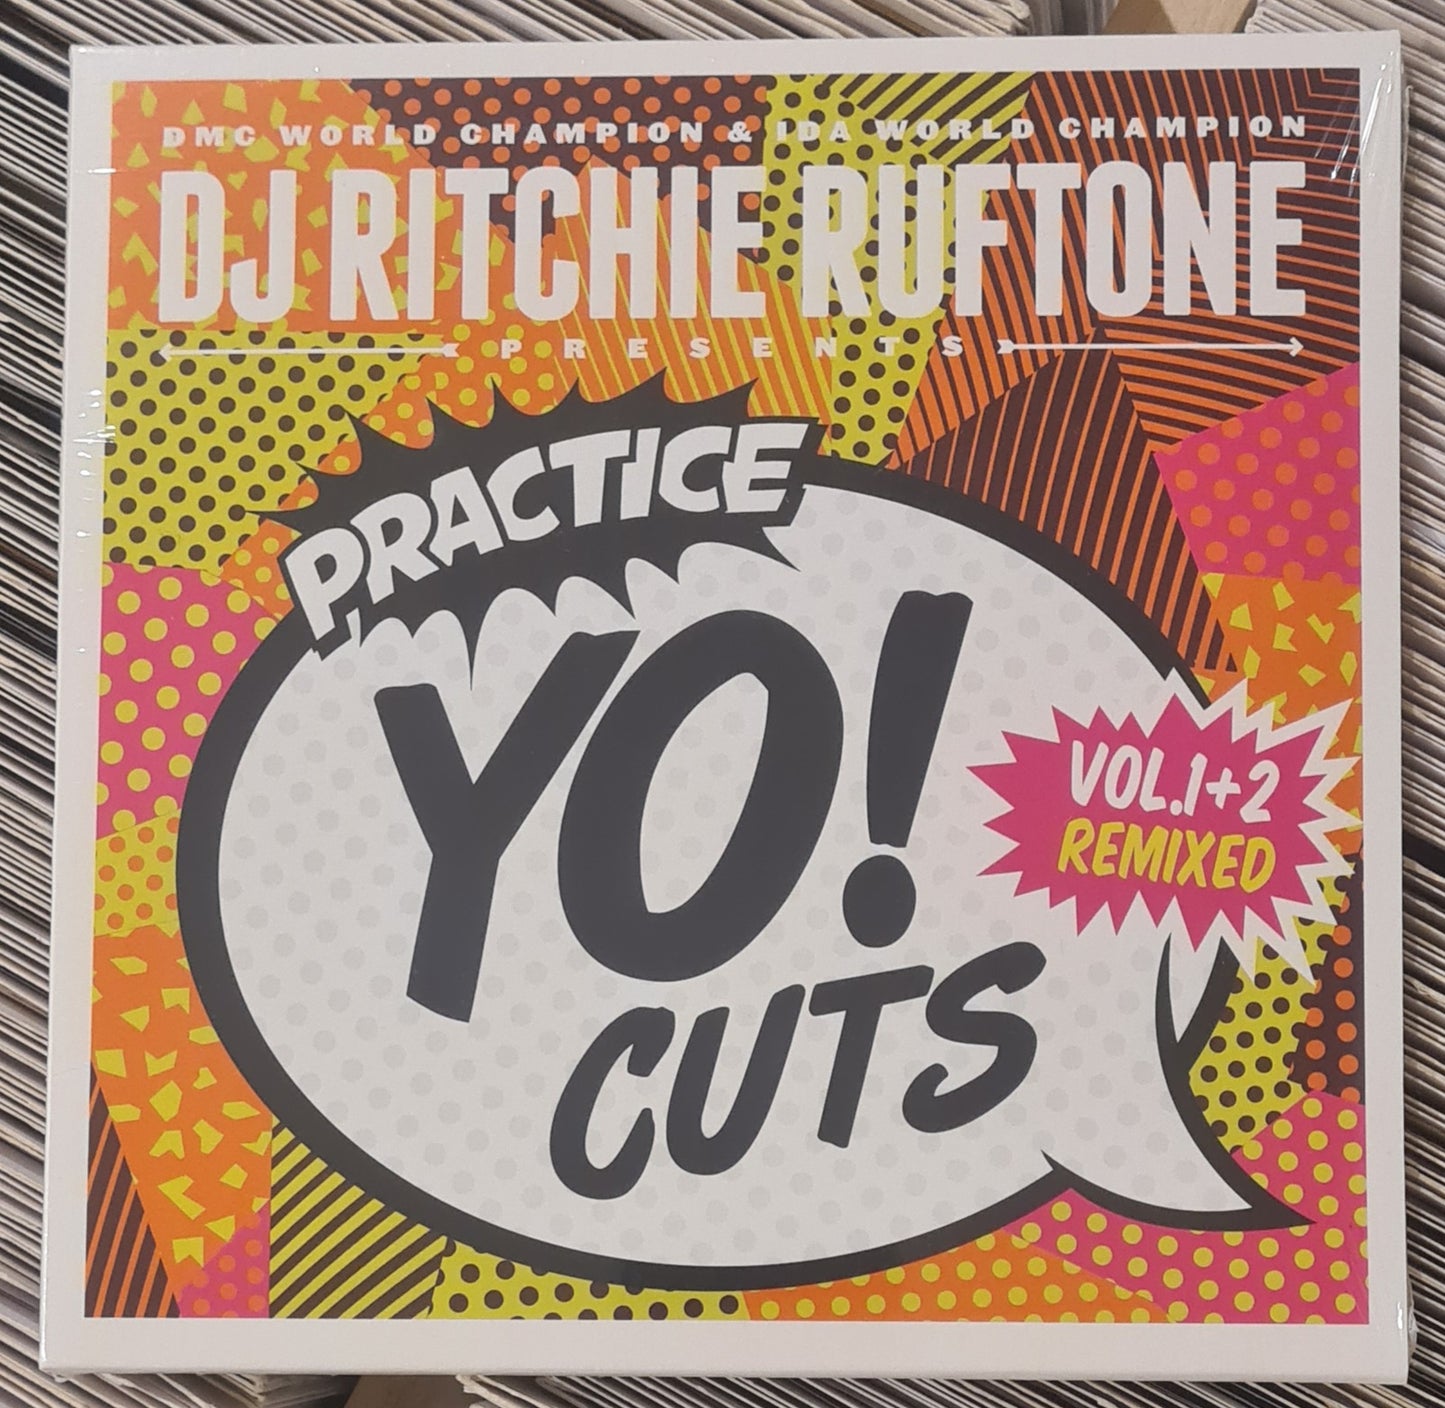 DJ RITCHIE RUFTONE - Practice Yo! Cuts Vol 1 & 2 Remixed - 7" Last 1